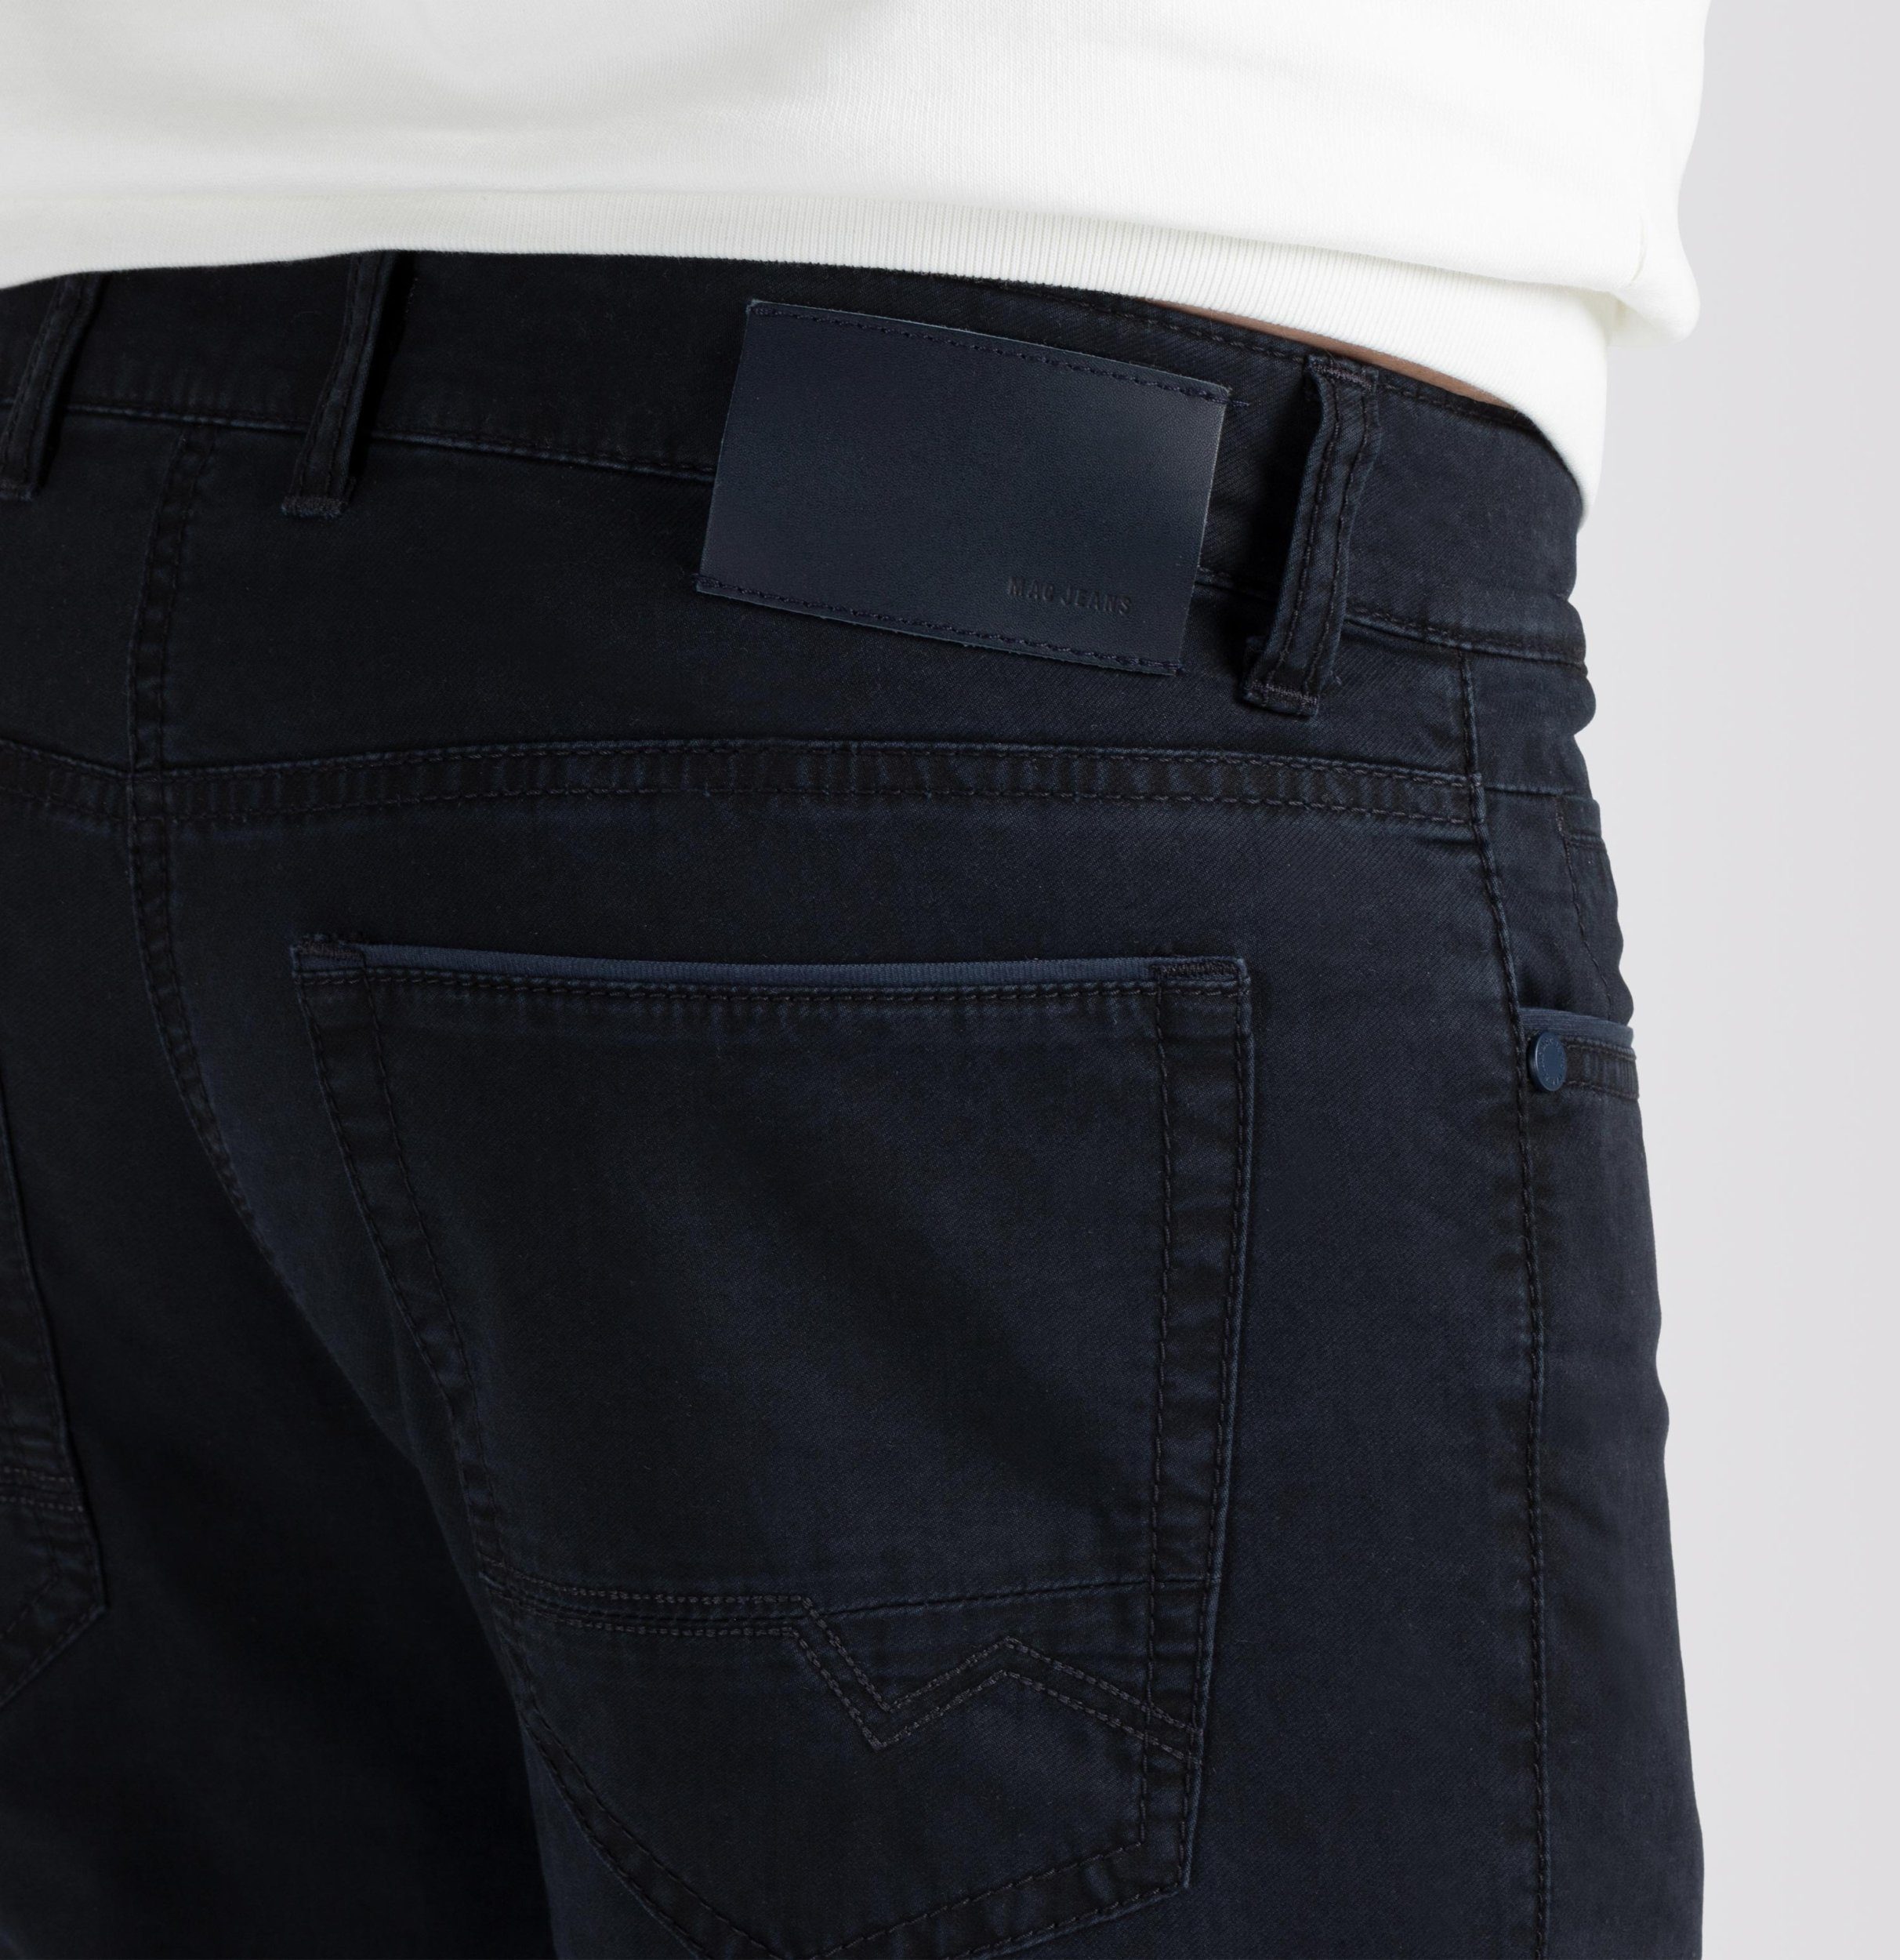 5-Pocket-Jeans MAC JEANS - Gabardine Pipe, Arne Two-Tone